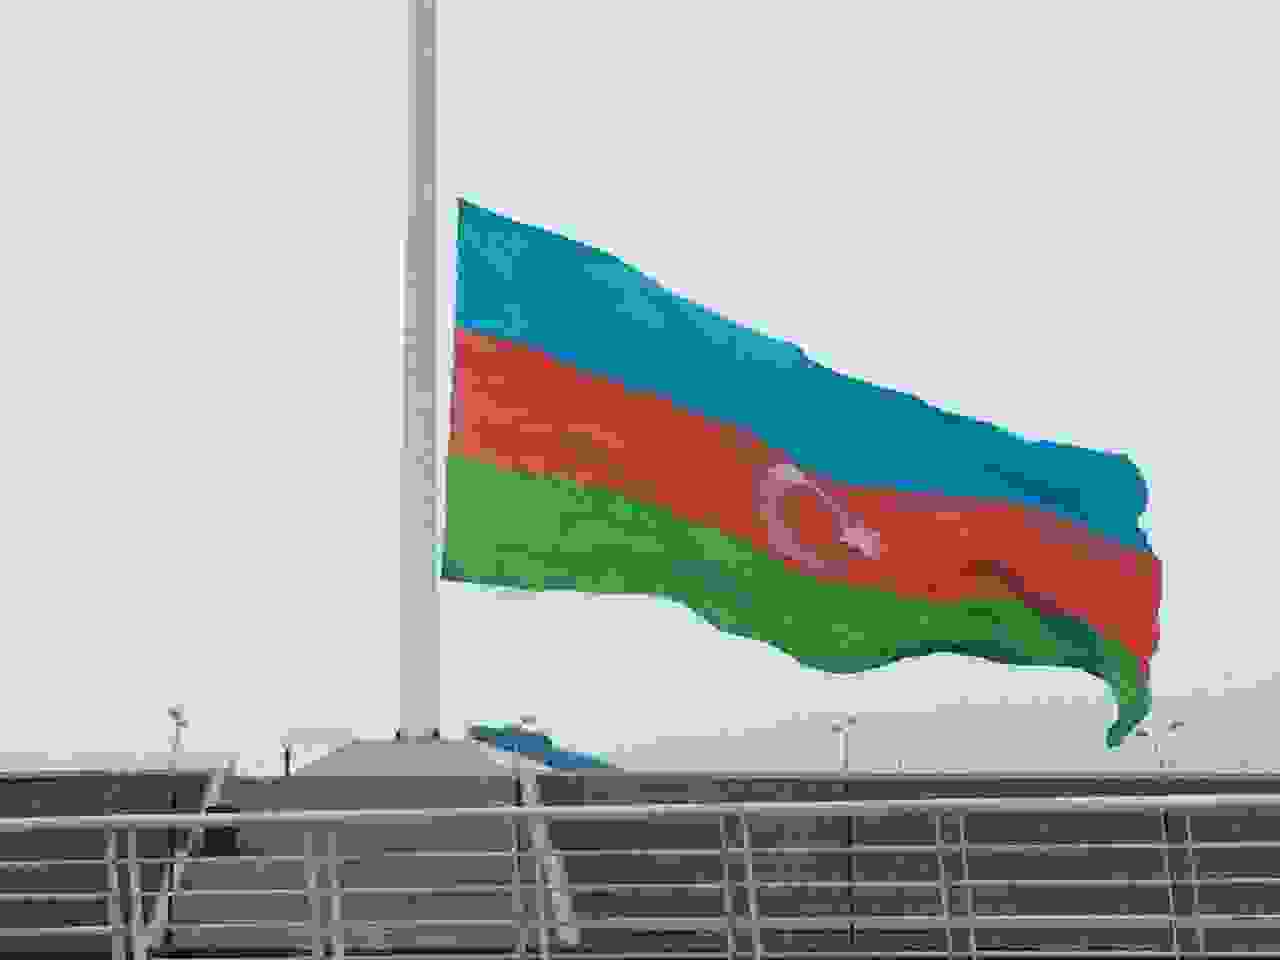 Baku flagpole